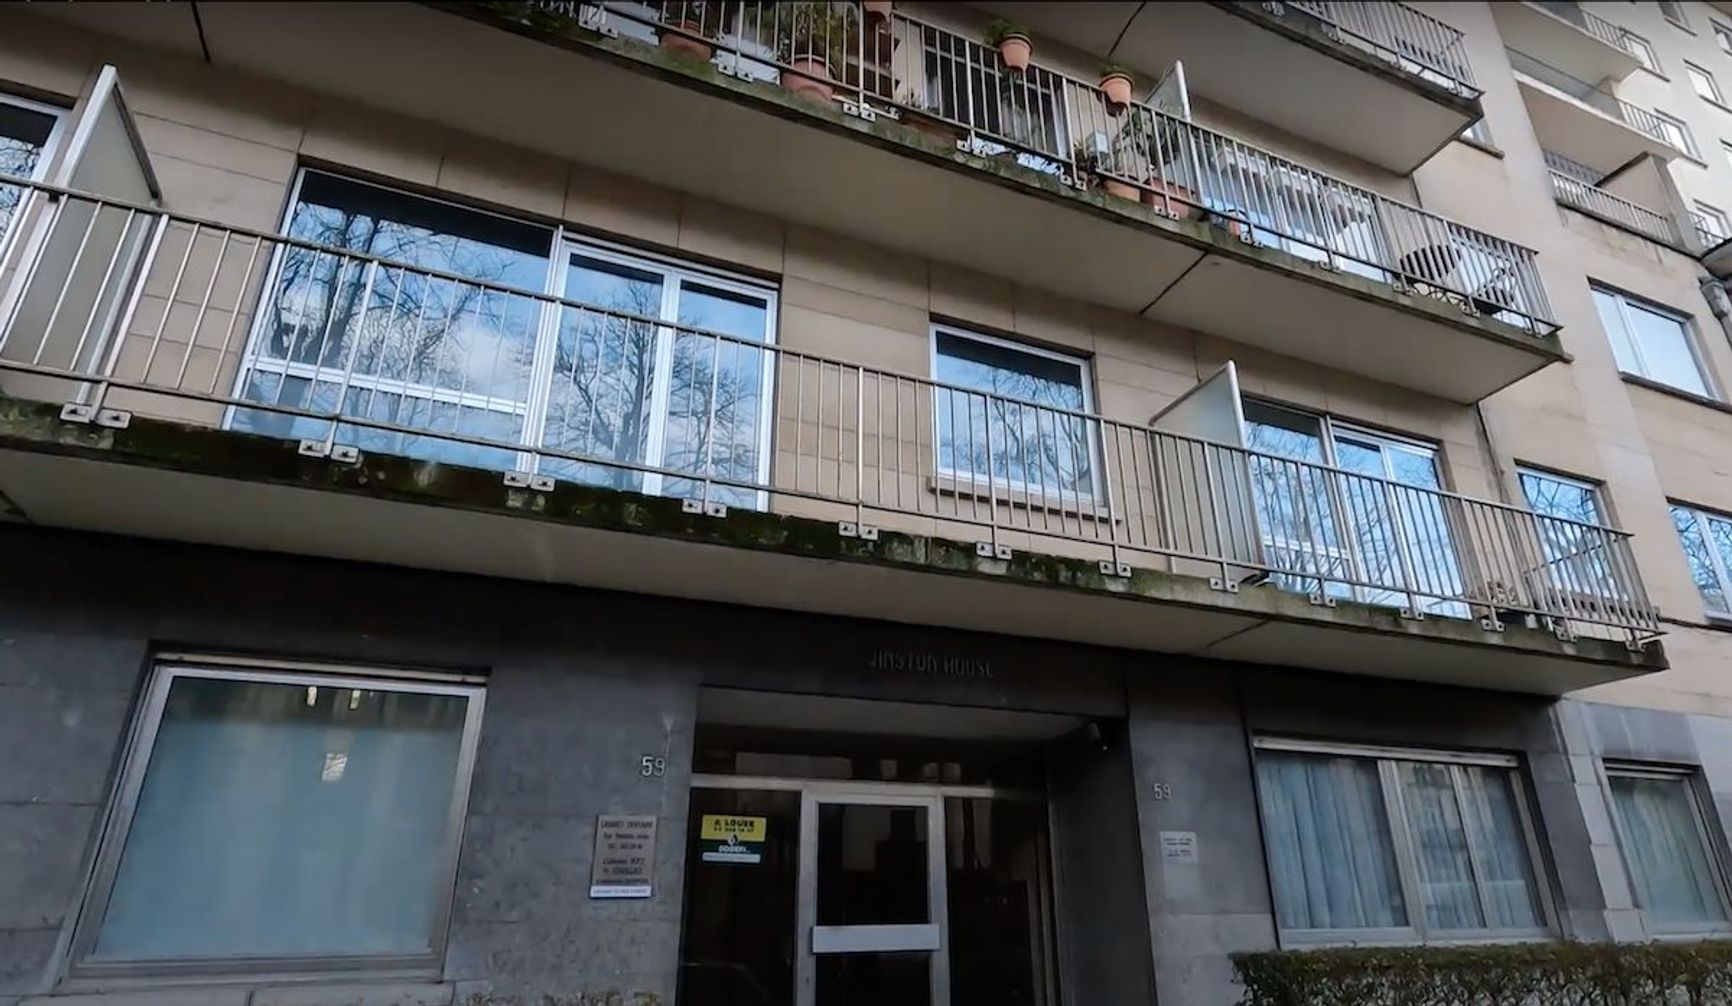 Viktor Labin’s apartment block in Brussels